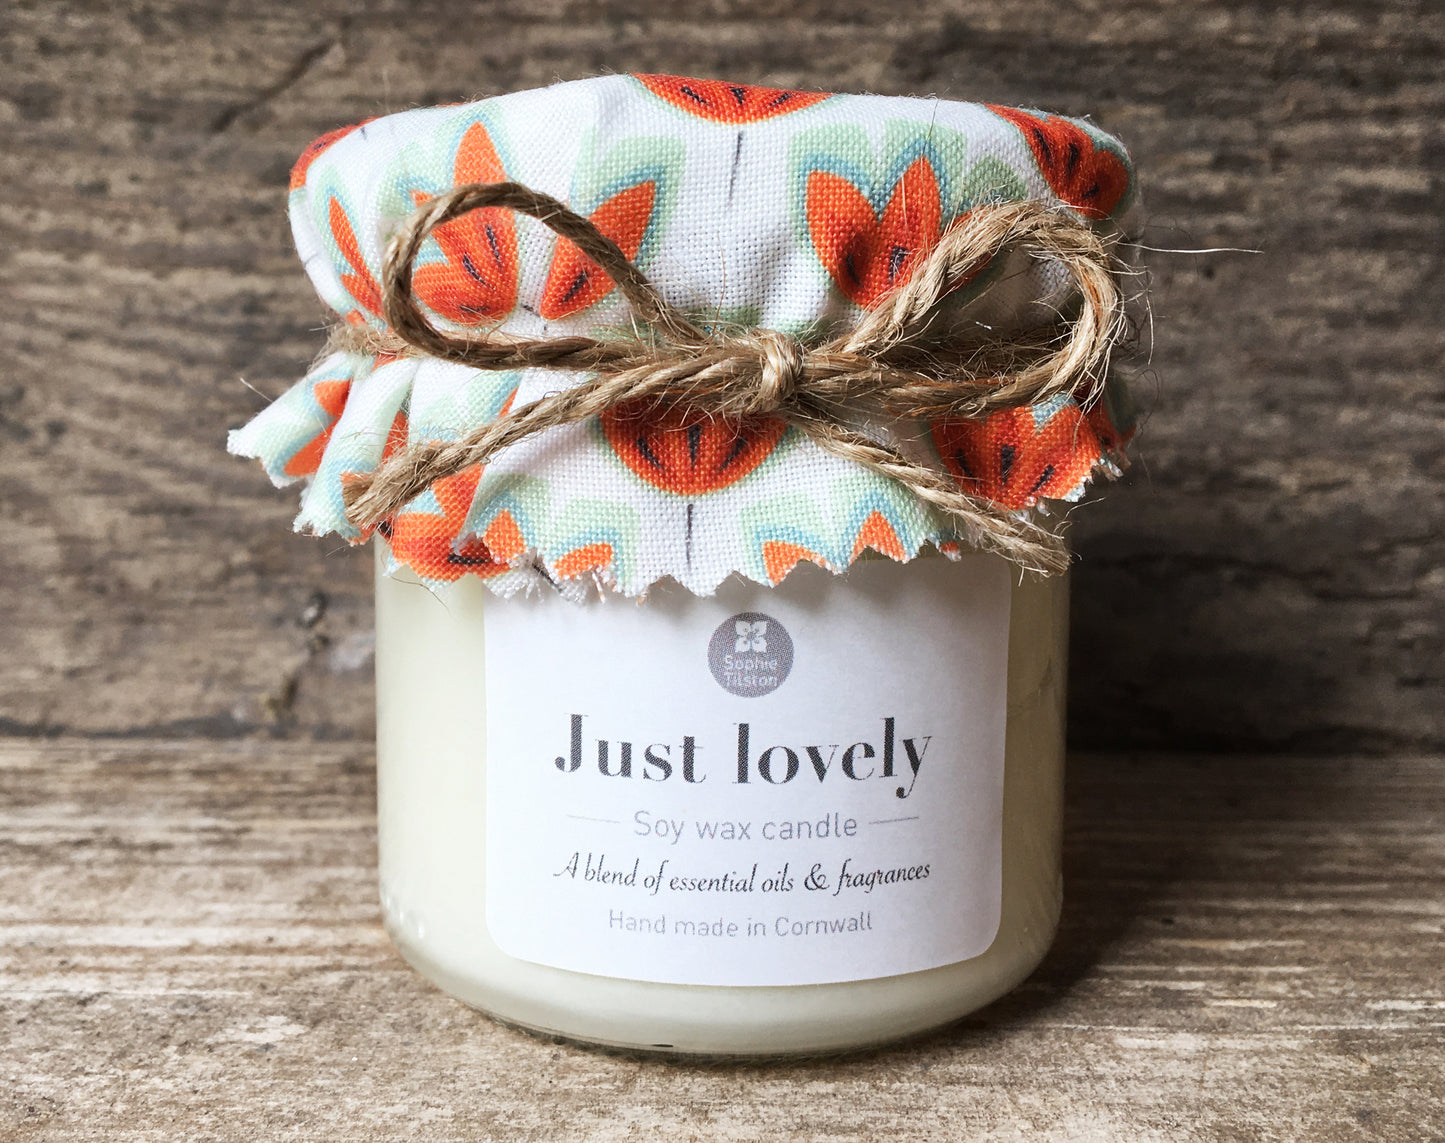 JUST LOVELY (Orange tulip fabric) Handmade scented jam jar candle